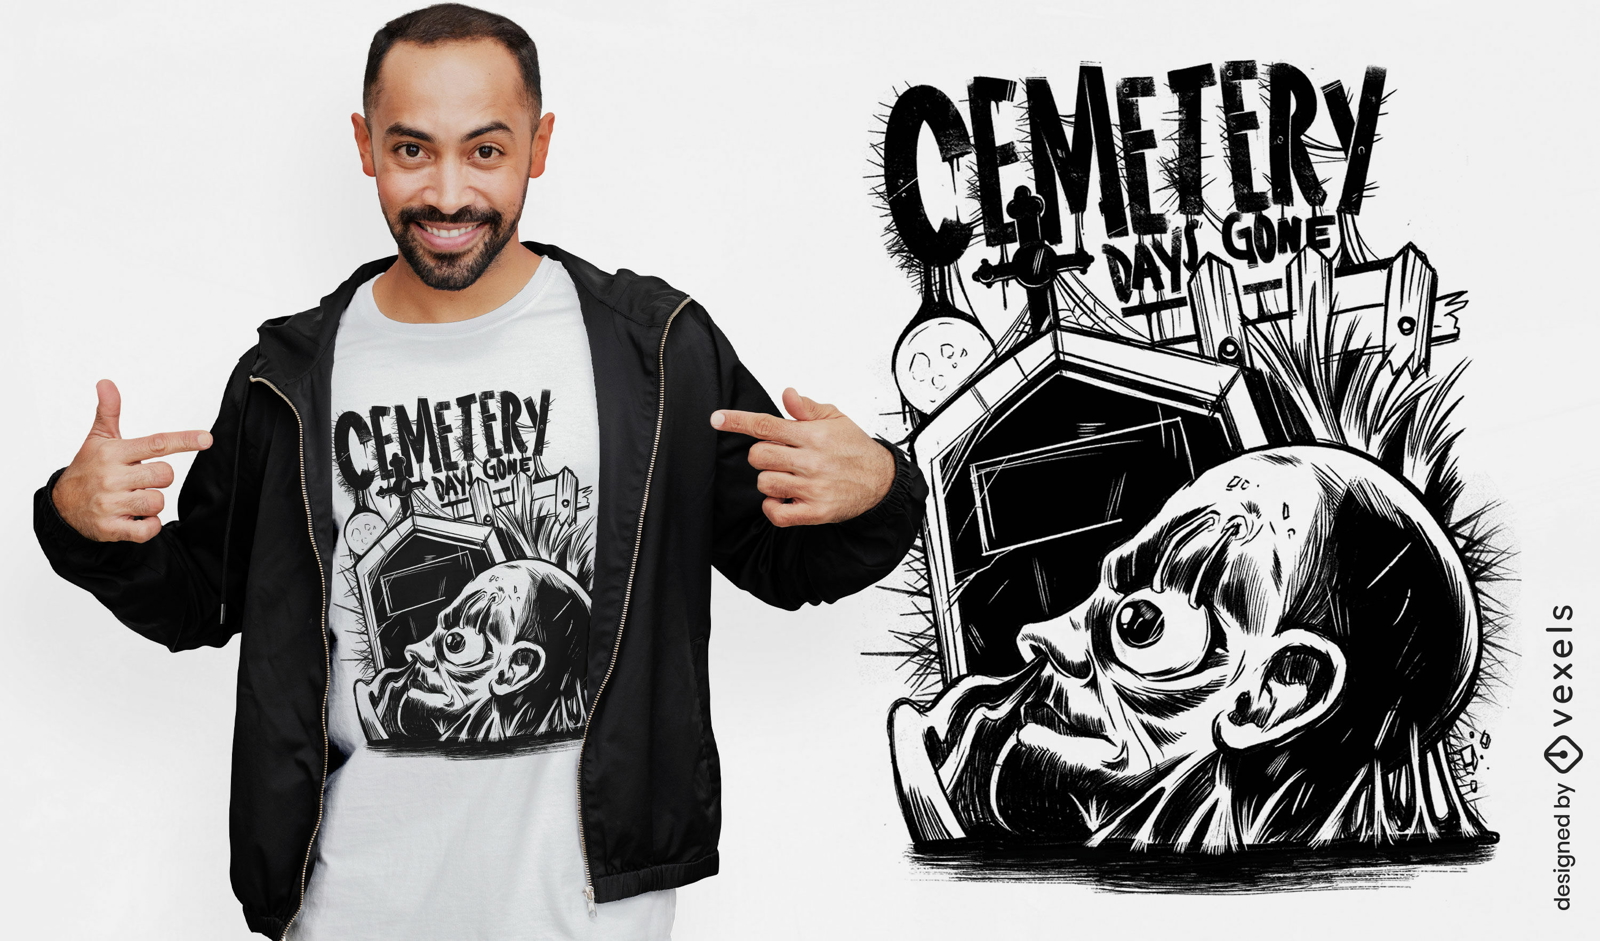 Cemetery creature t-shirt design